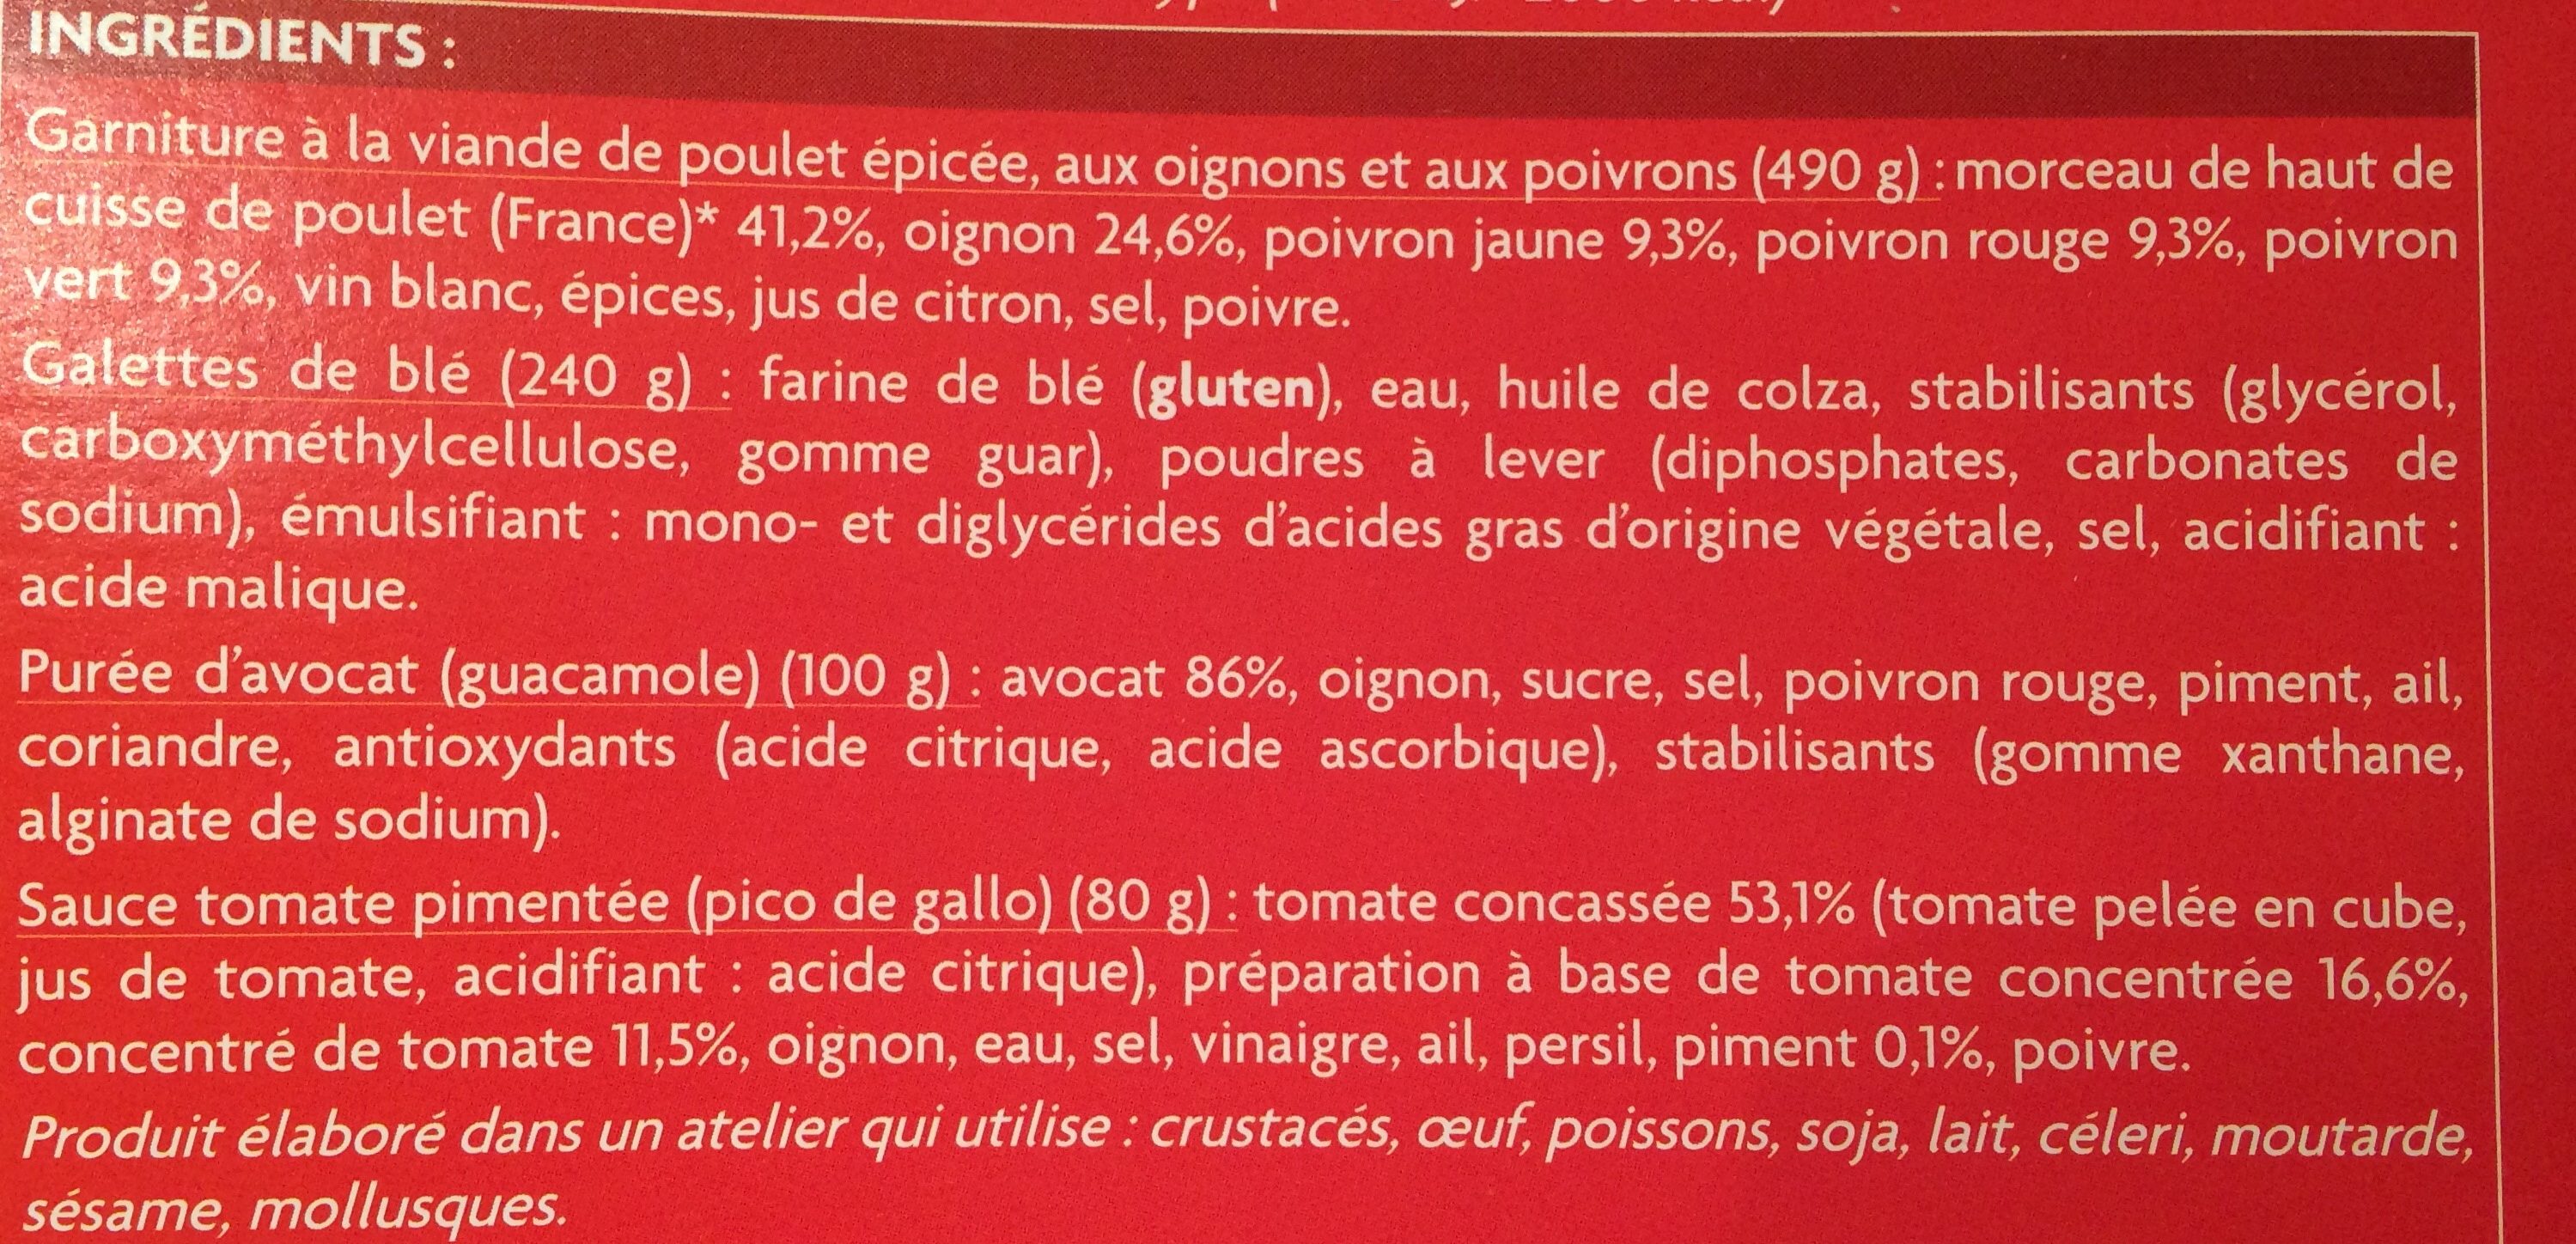 8 fajitas au poulet - Ingredients - fr